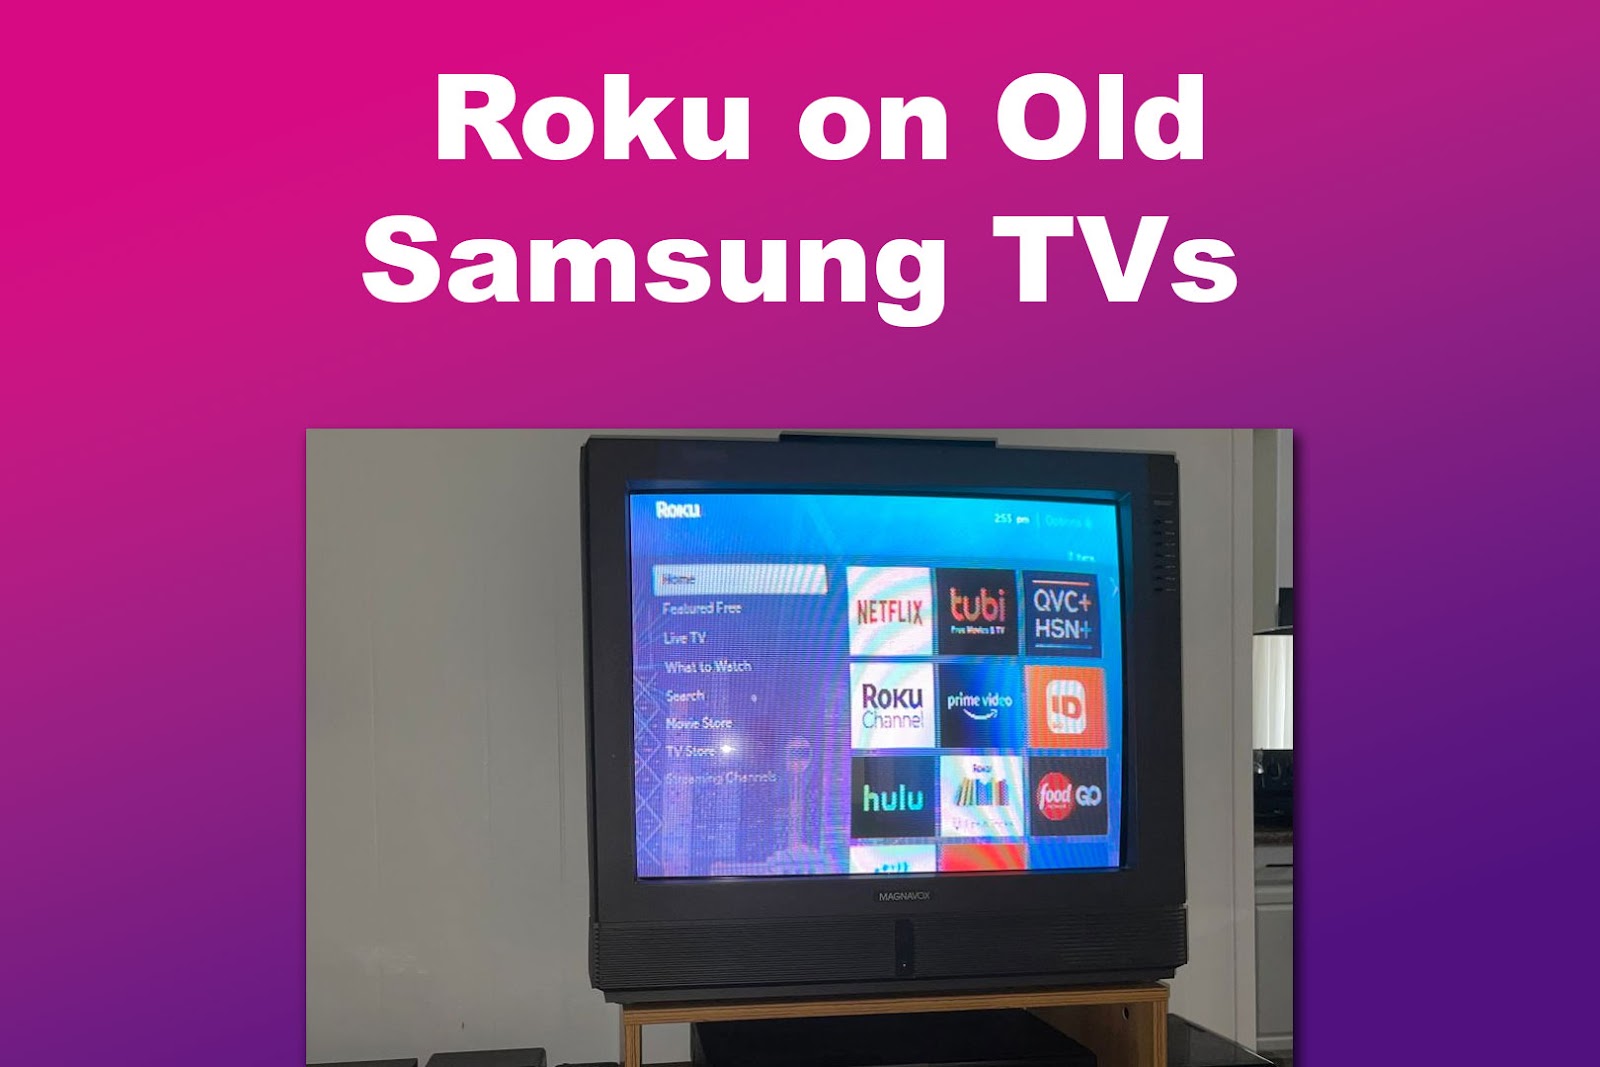 Roku on Old Samsung TVs?